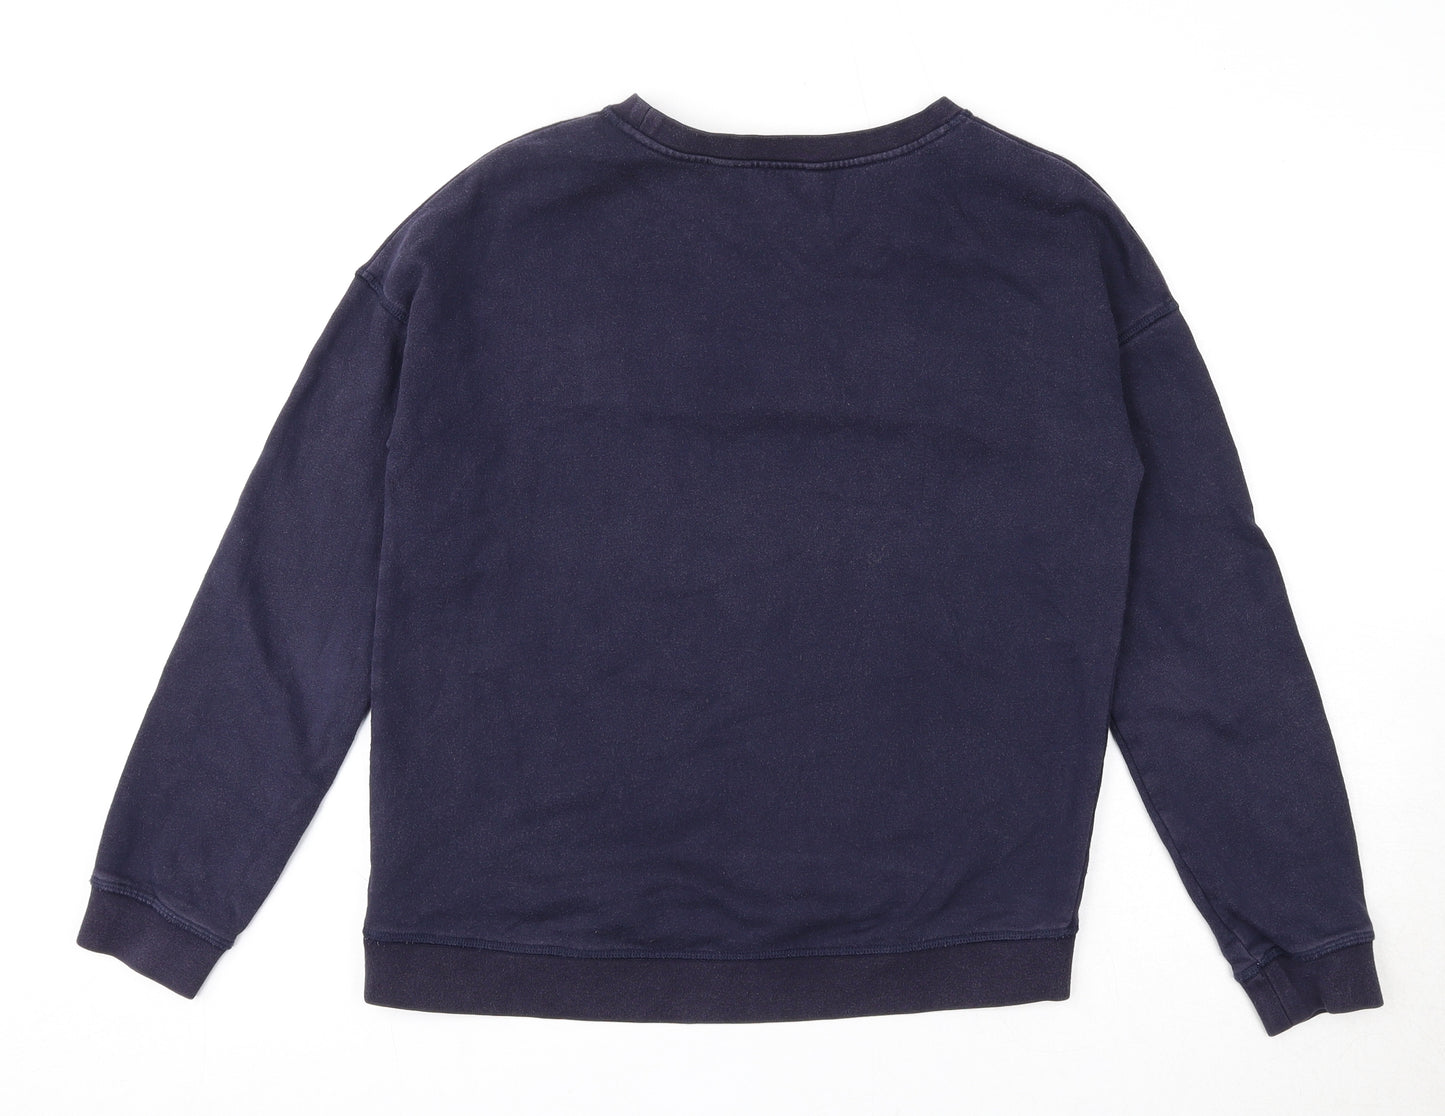 Boden Womens Blue Cotton Pullover Sweatshirt Size XS - Groovy